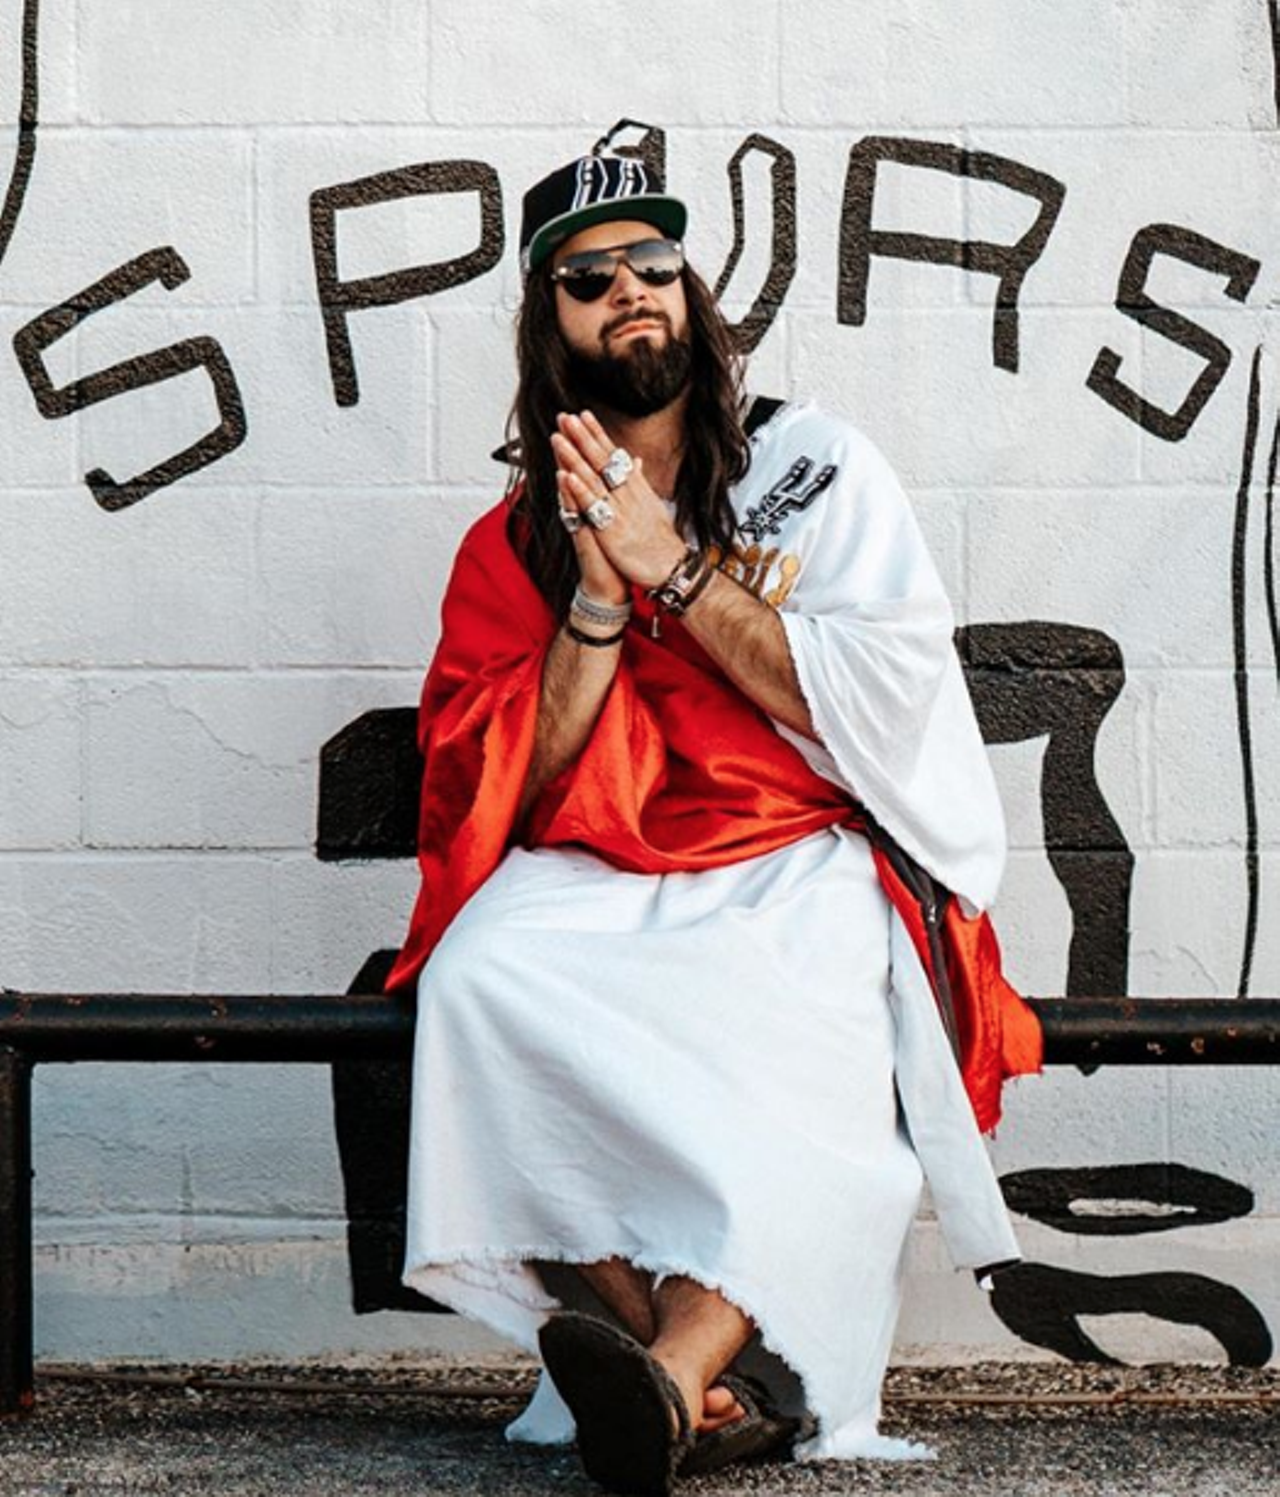 Spurs Jesus
You love the Spurs. You love Jesus. You love Spurs Jesus. Who else would you dress up as?
Photo via Instagram / spursjesus